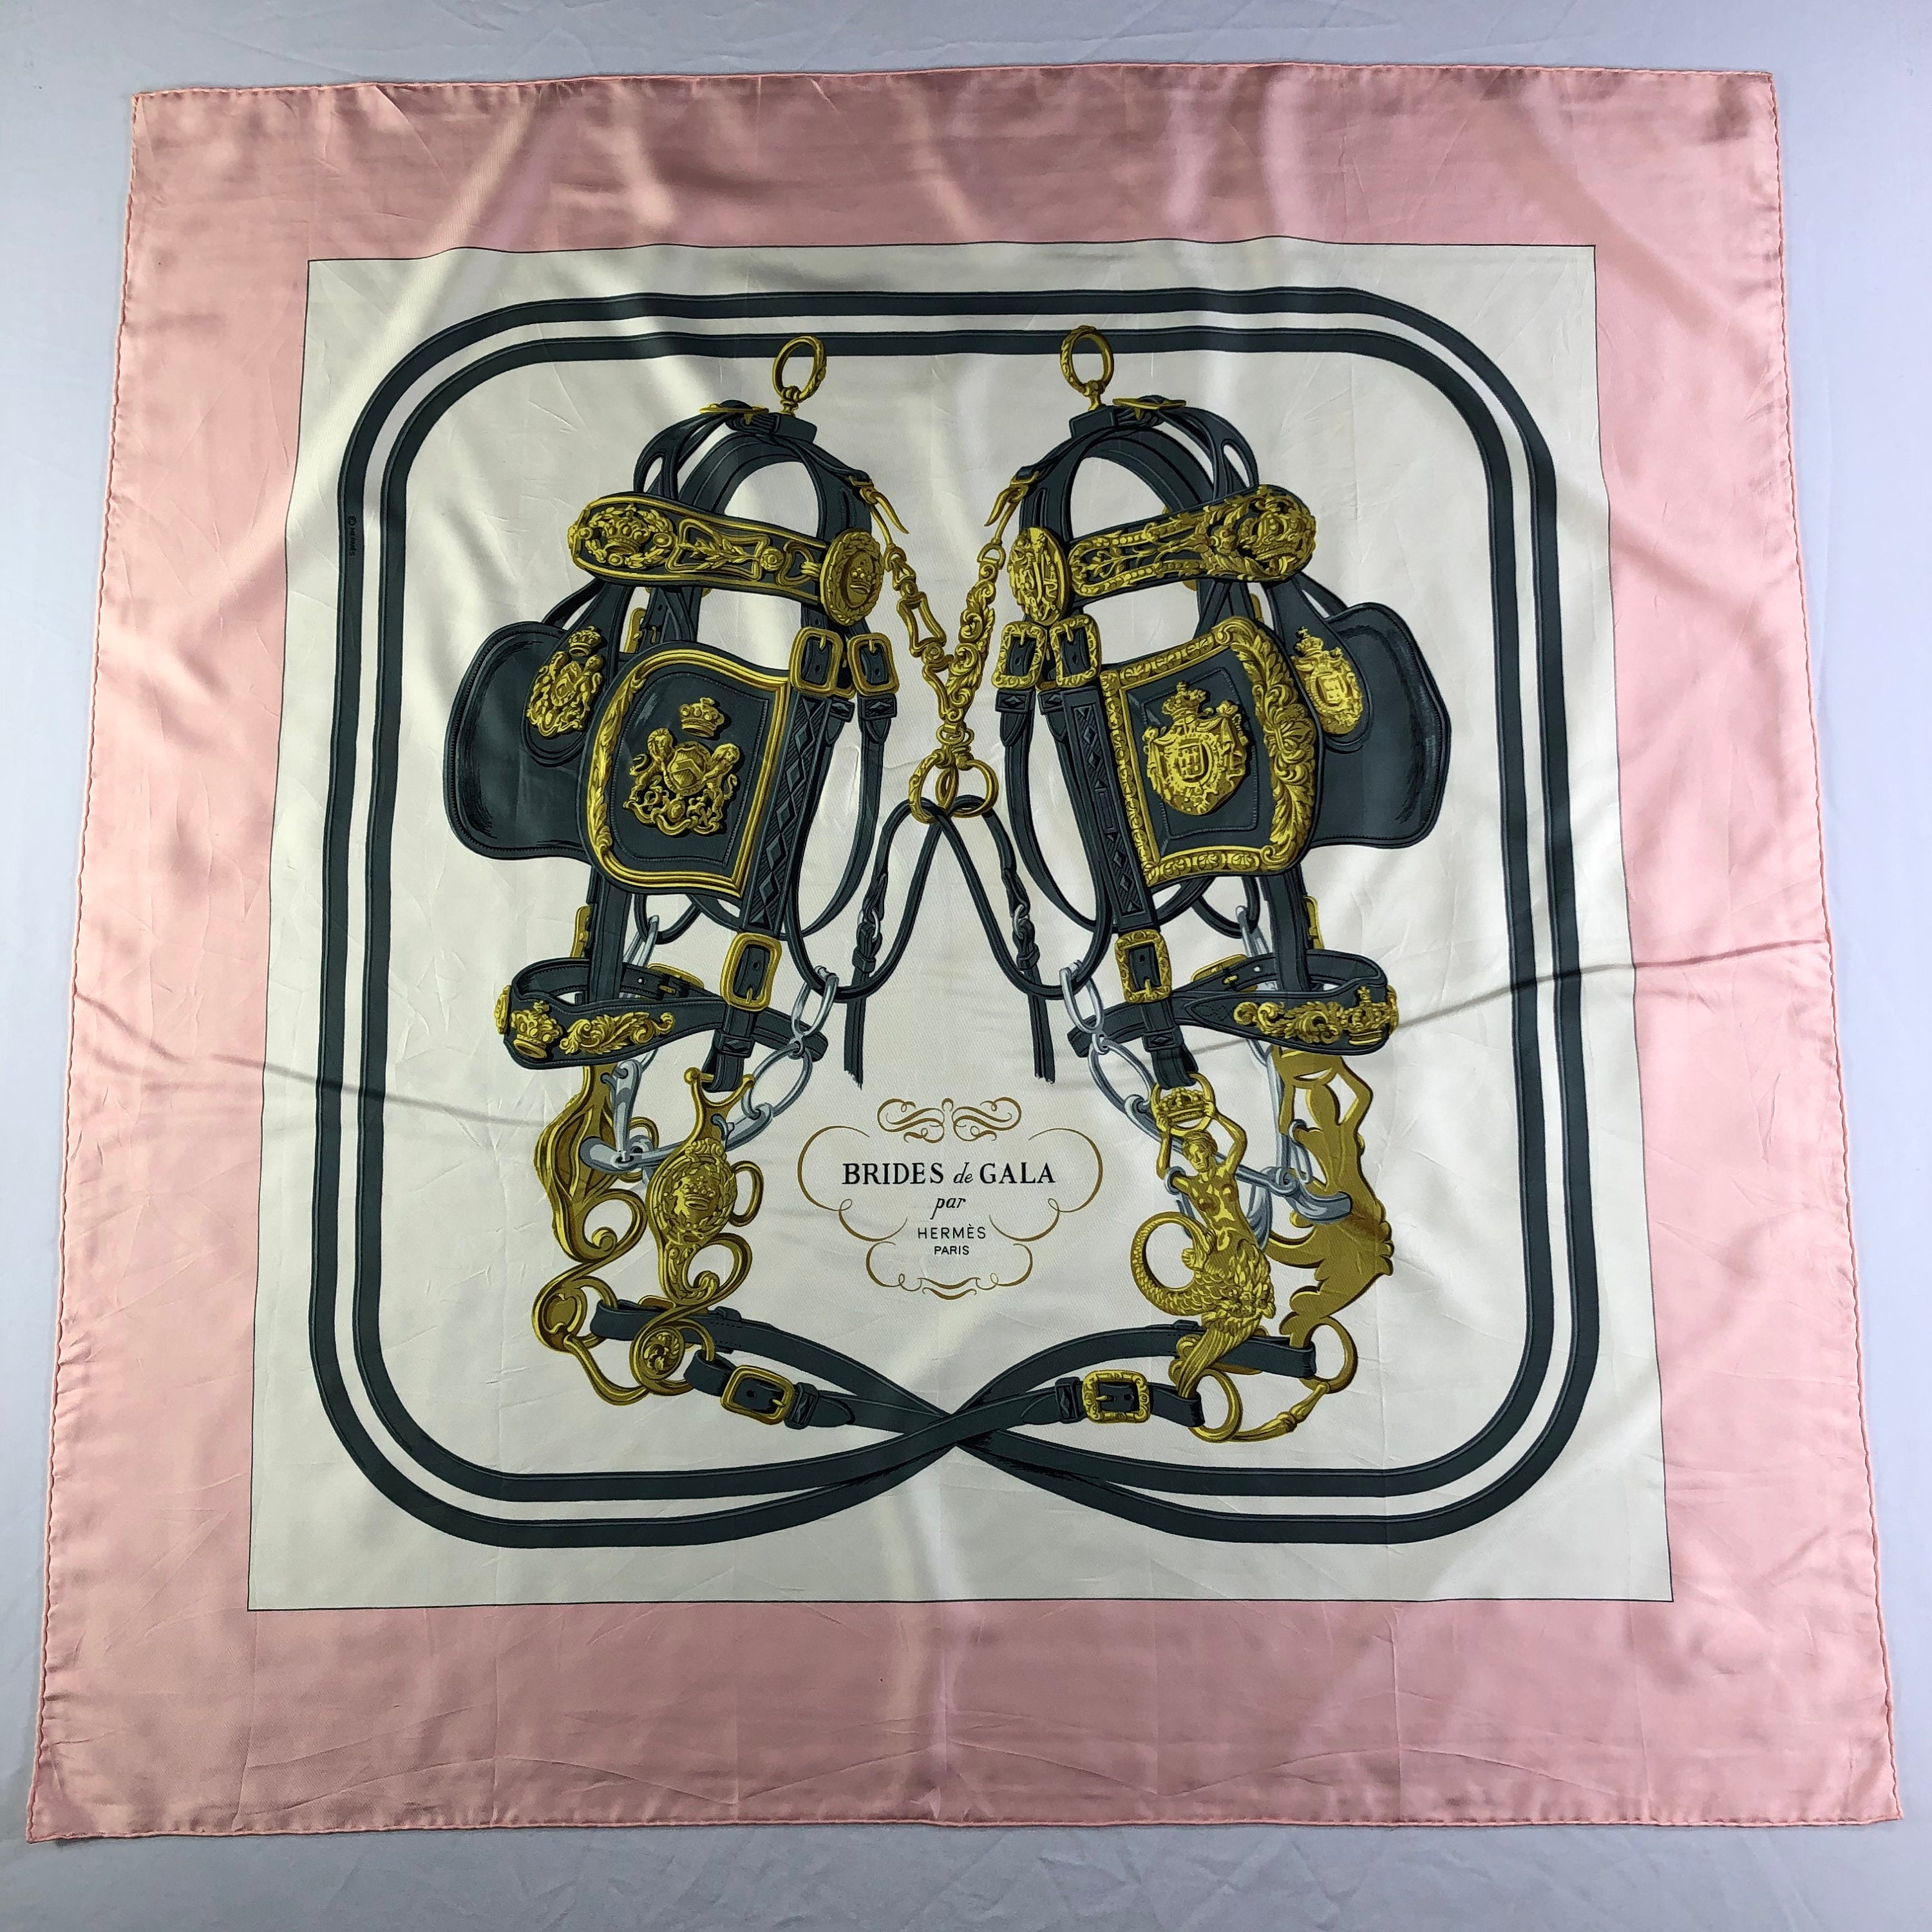 Hermes Brides de Gala Limited Edition Heart Box Scarf Silk 90 cm BNIB  Collector!